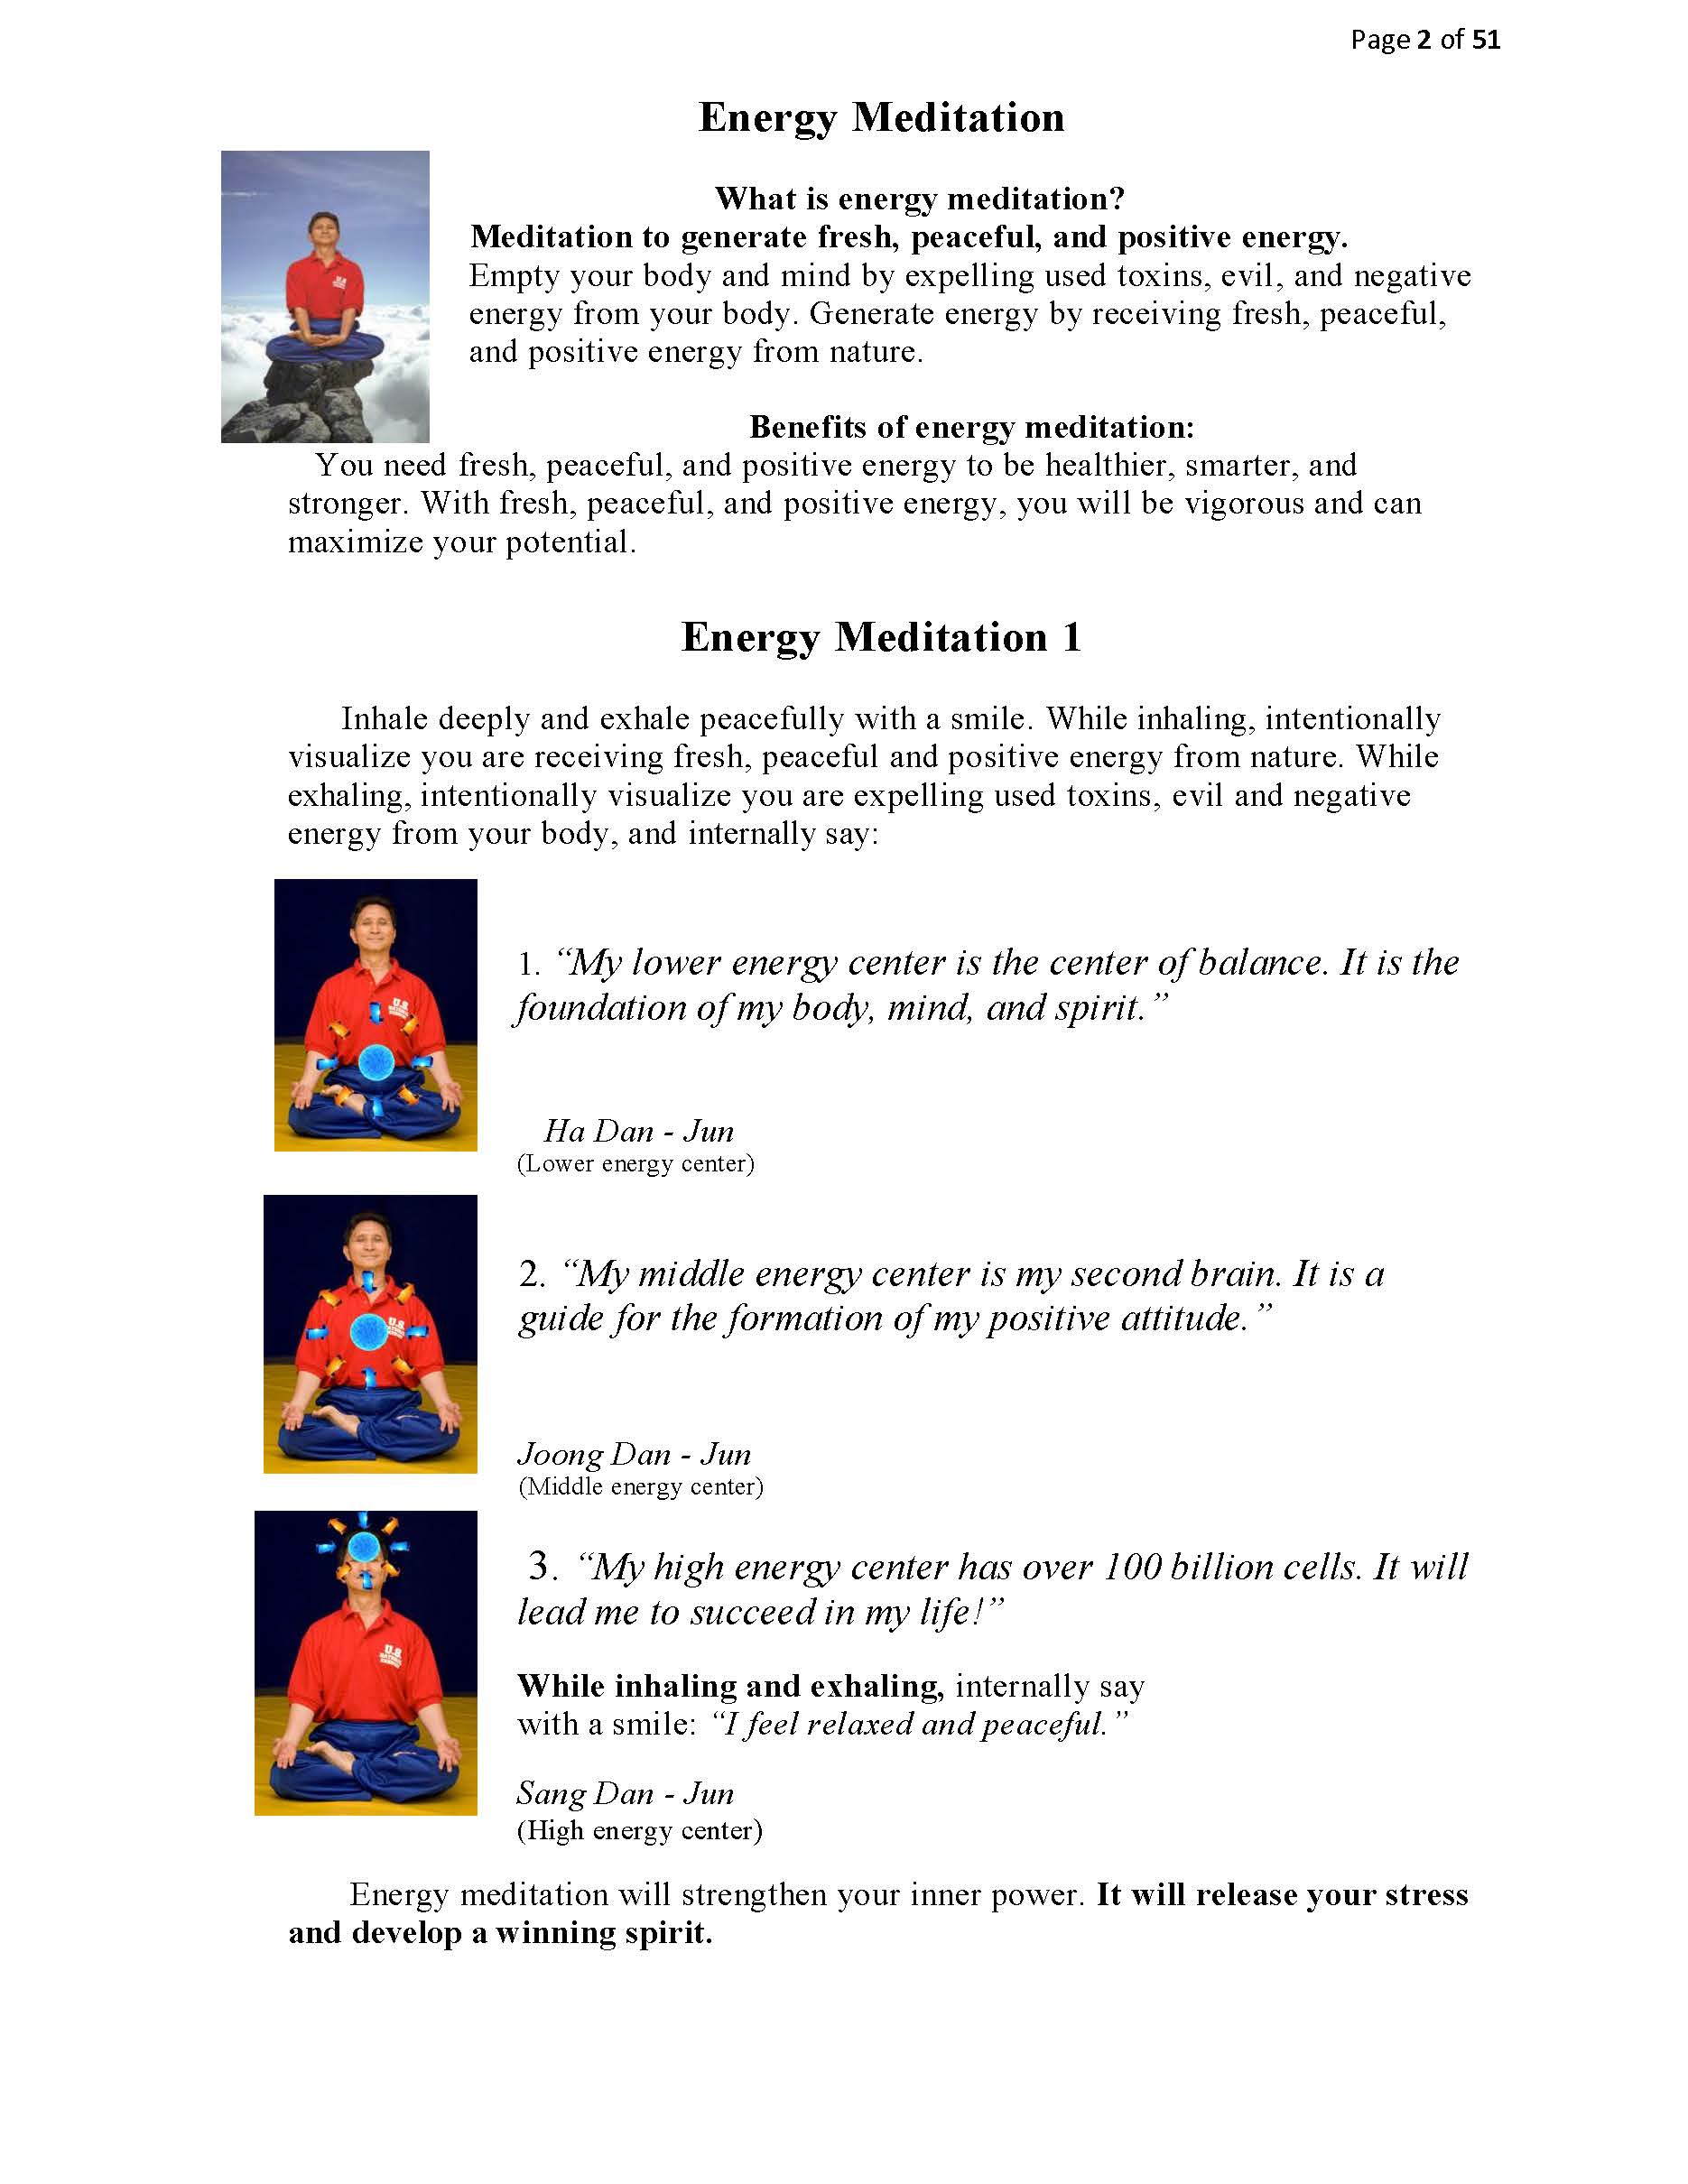 Energy Meditation